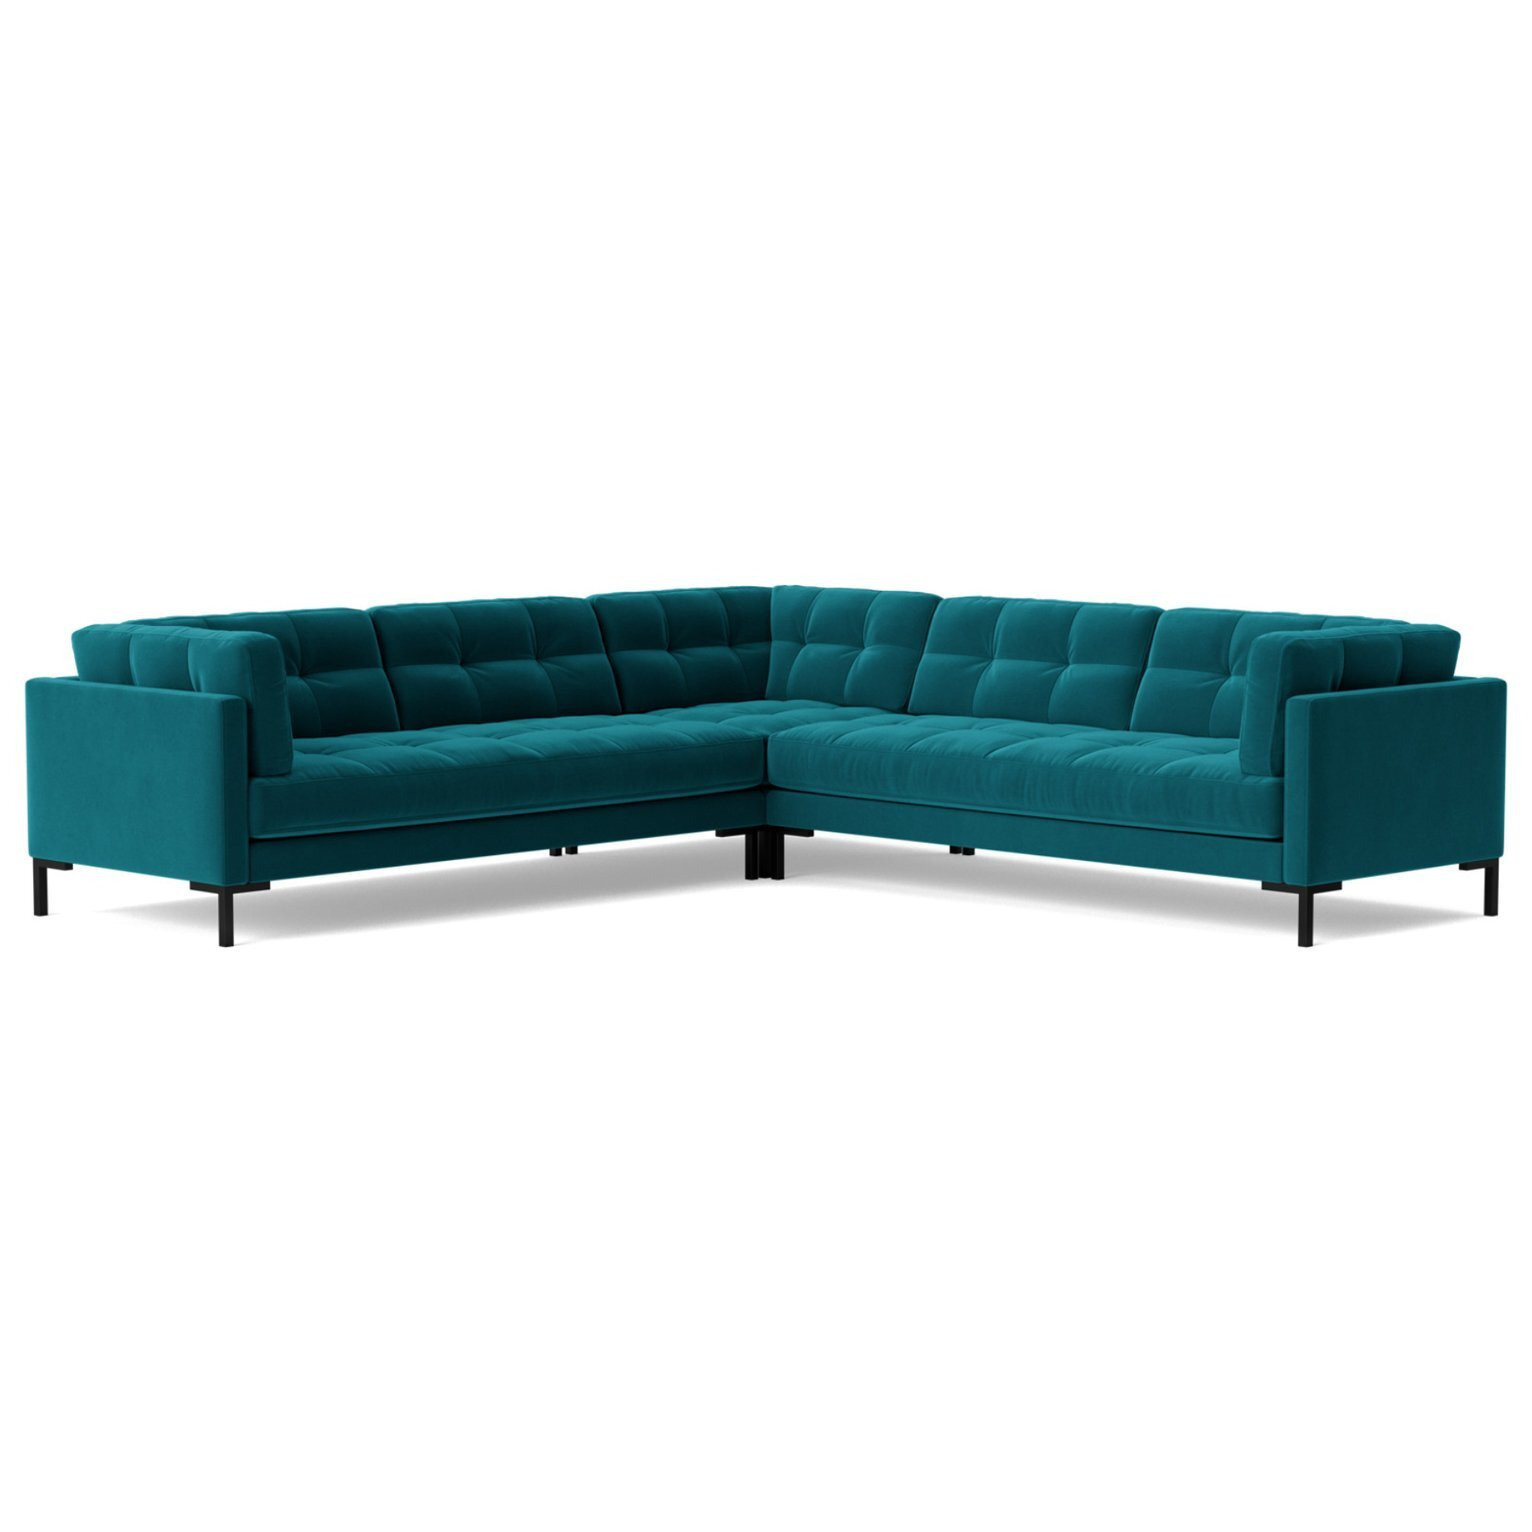 Swoon Landau Velvet 5 Seater Corner Sofa - Kingfisher Blue - image 1